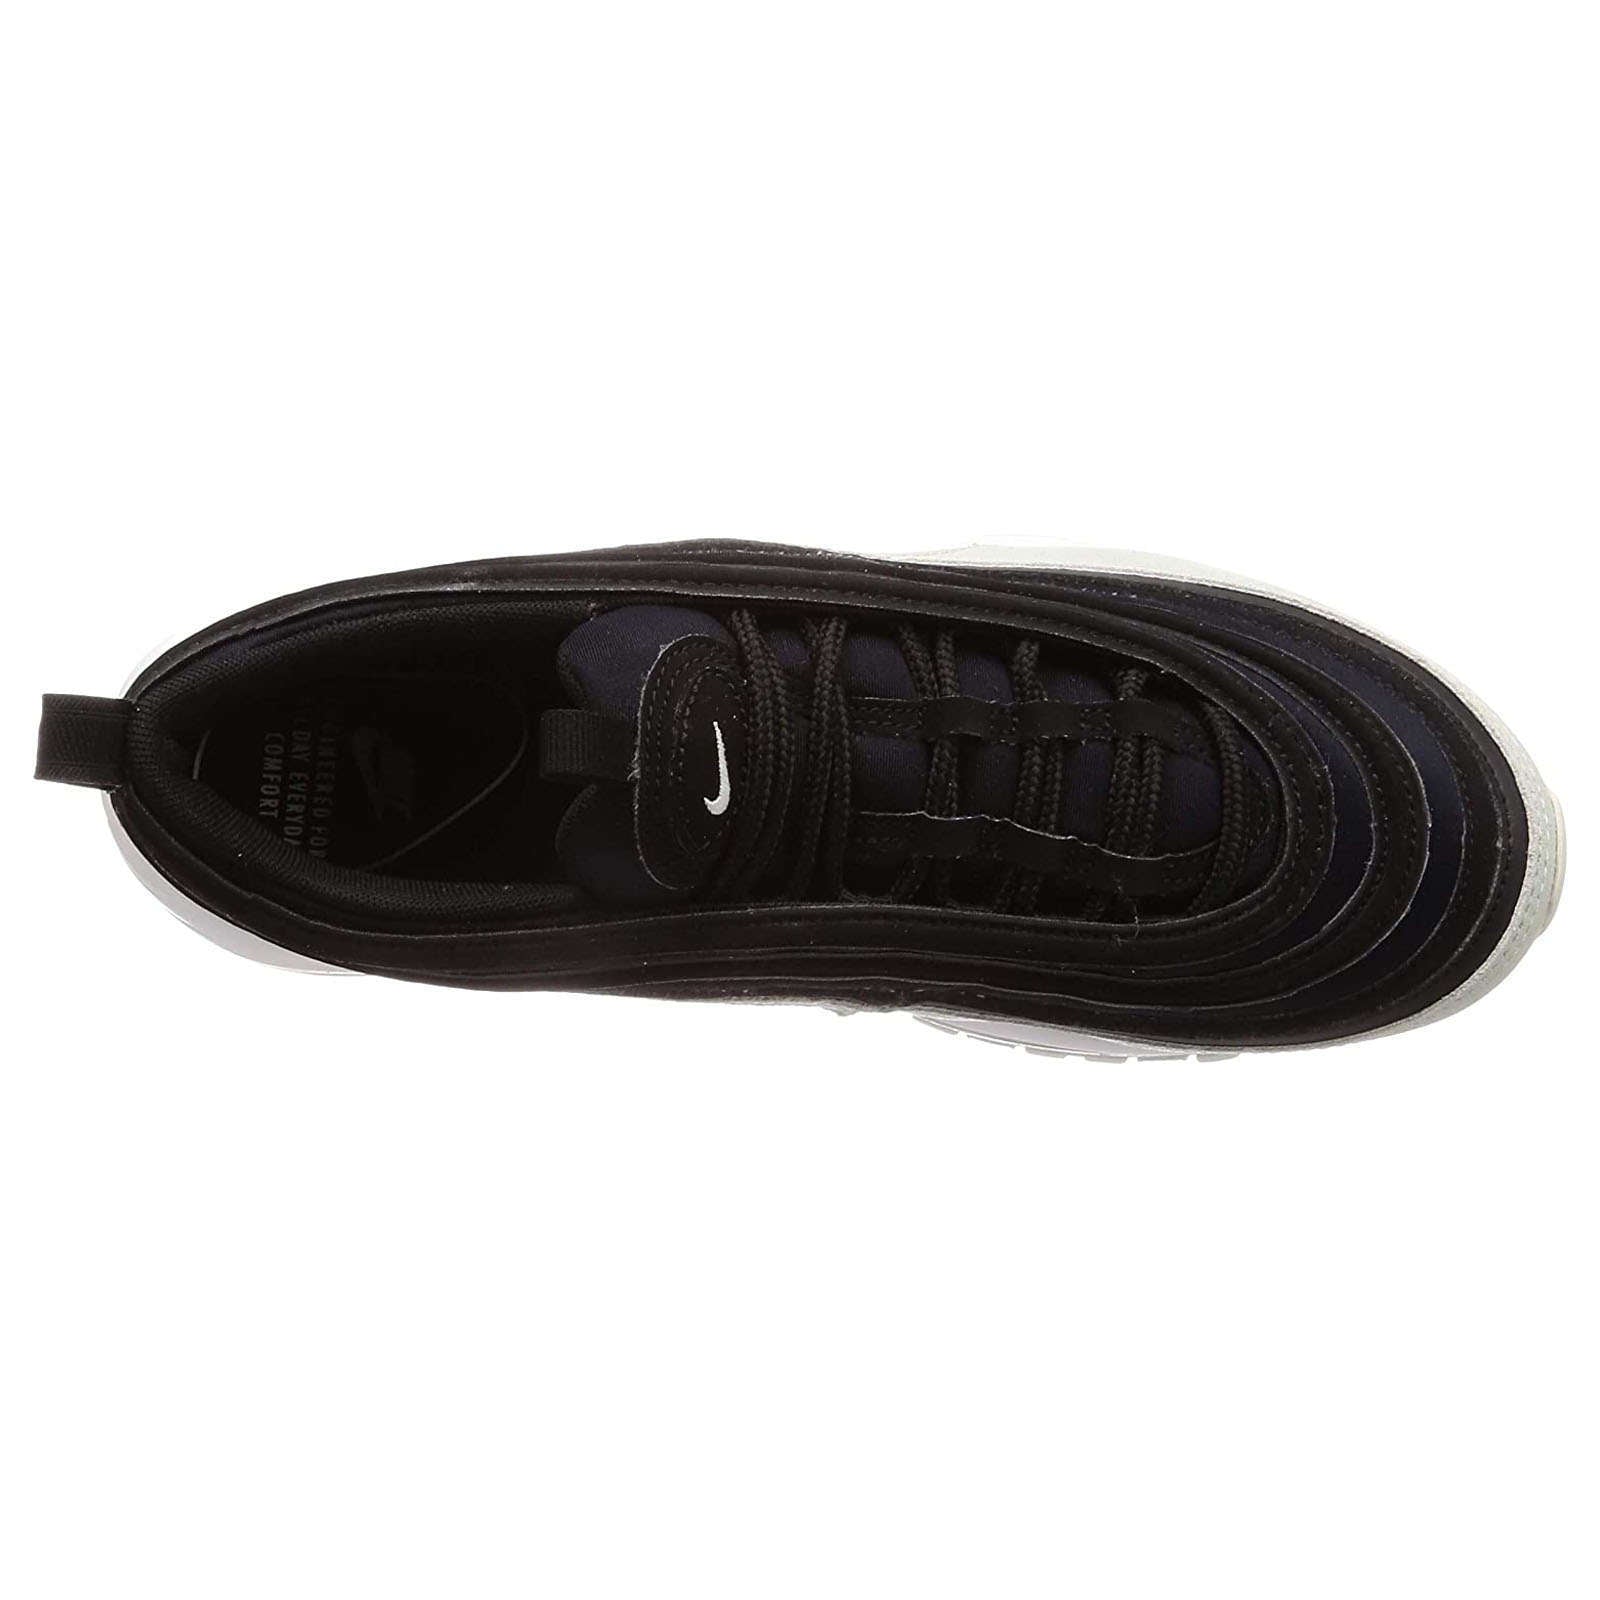 Nike Air Max 97 PRM Textile Leather Synthetic Women's Low-Top Trainers#color_black spuce aura